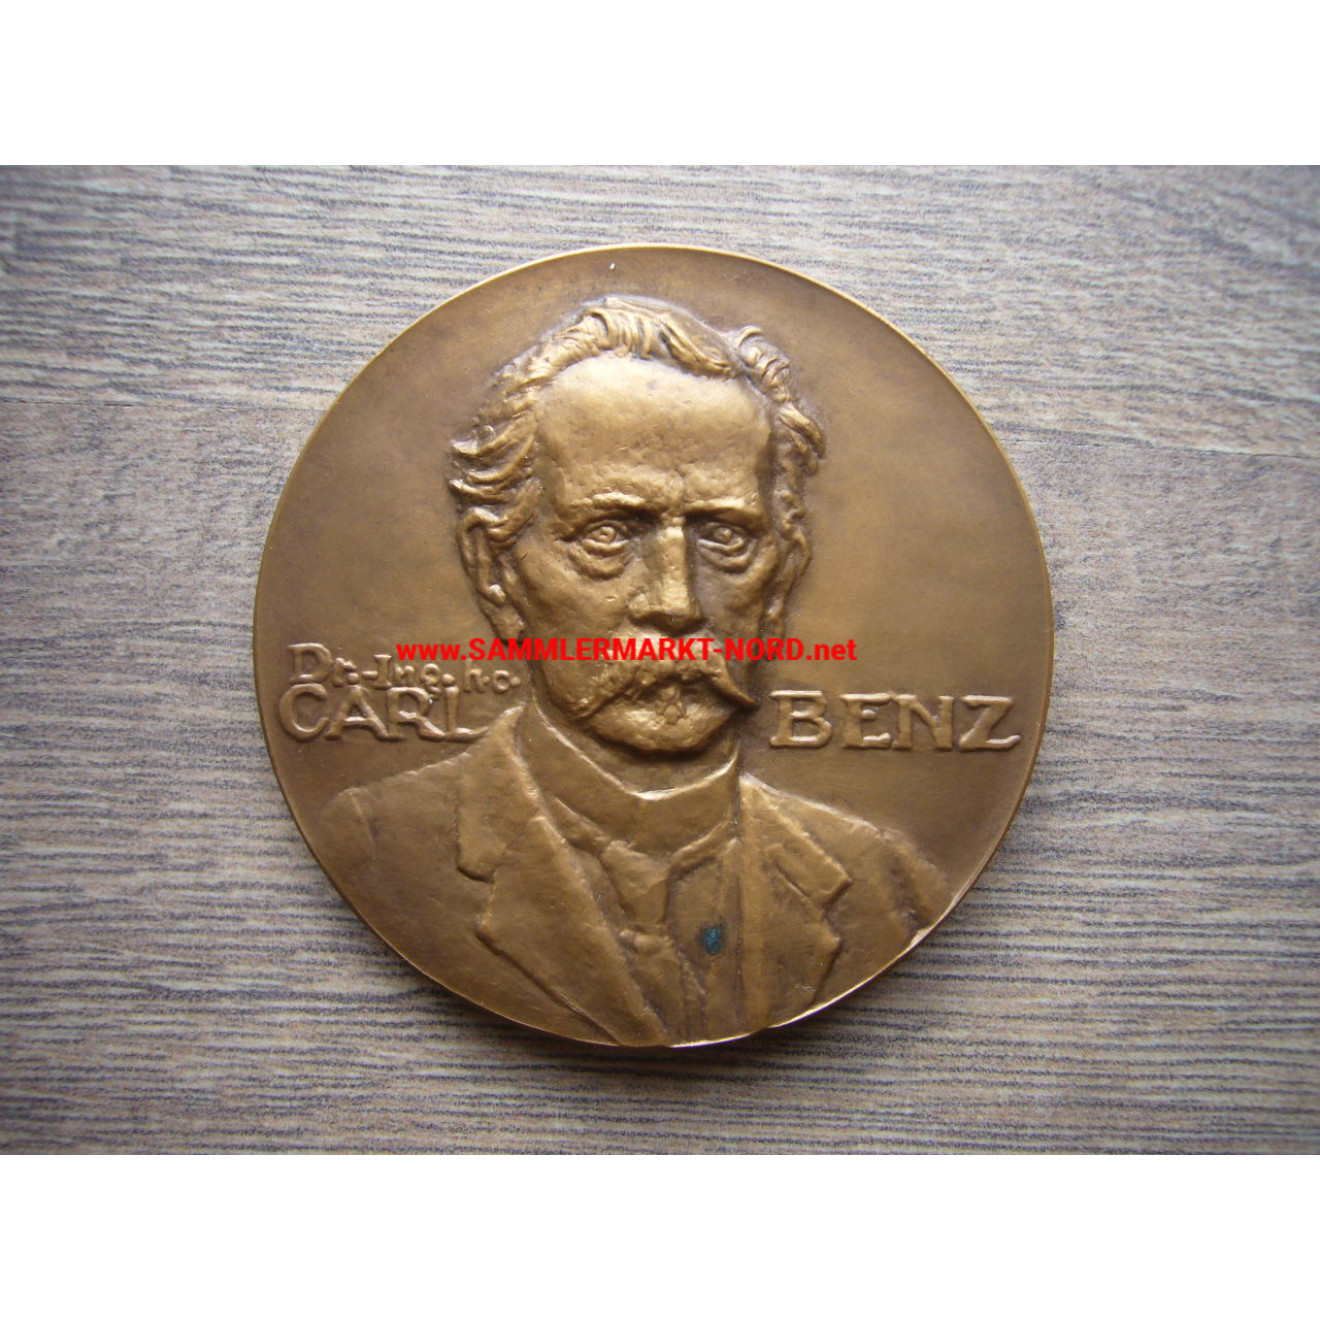 Dr. Carl Benz - Large bronze commemorative medal